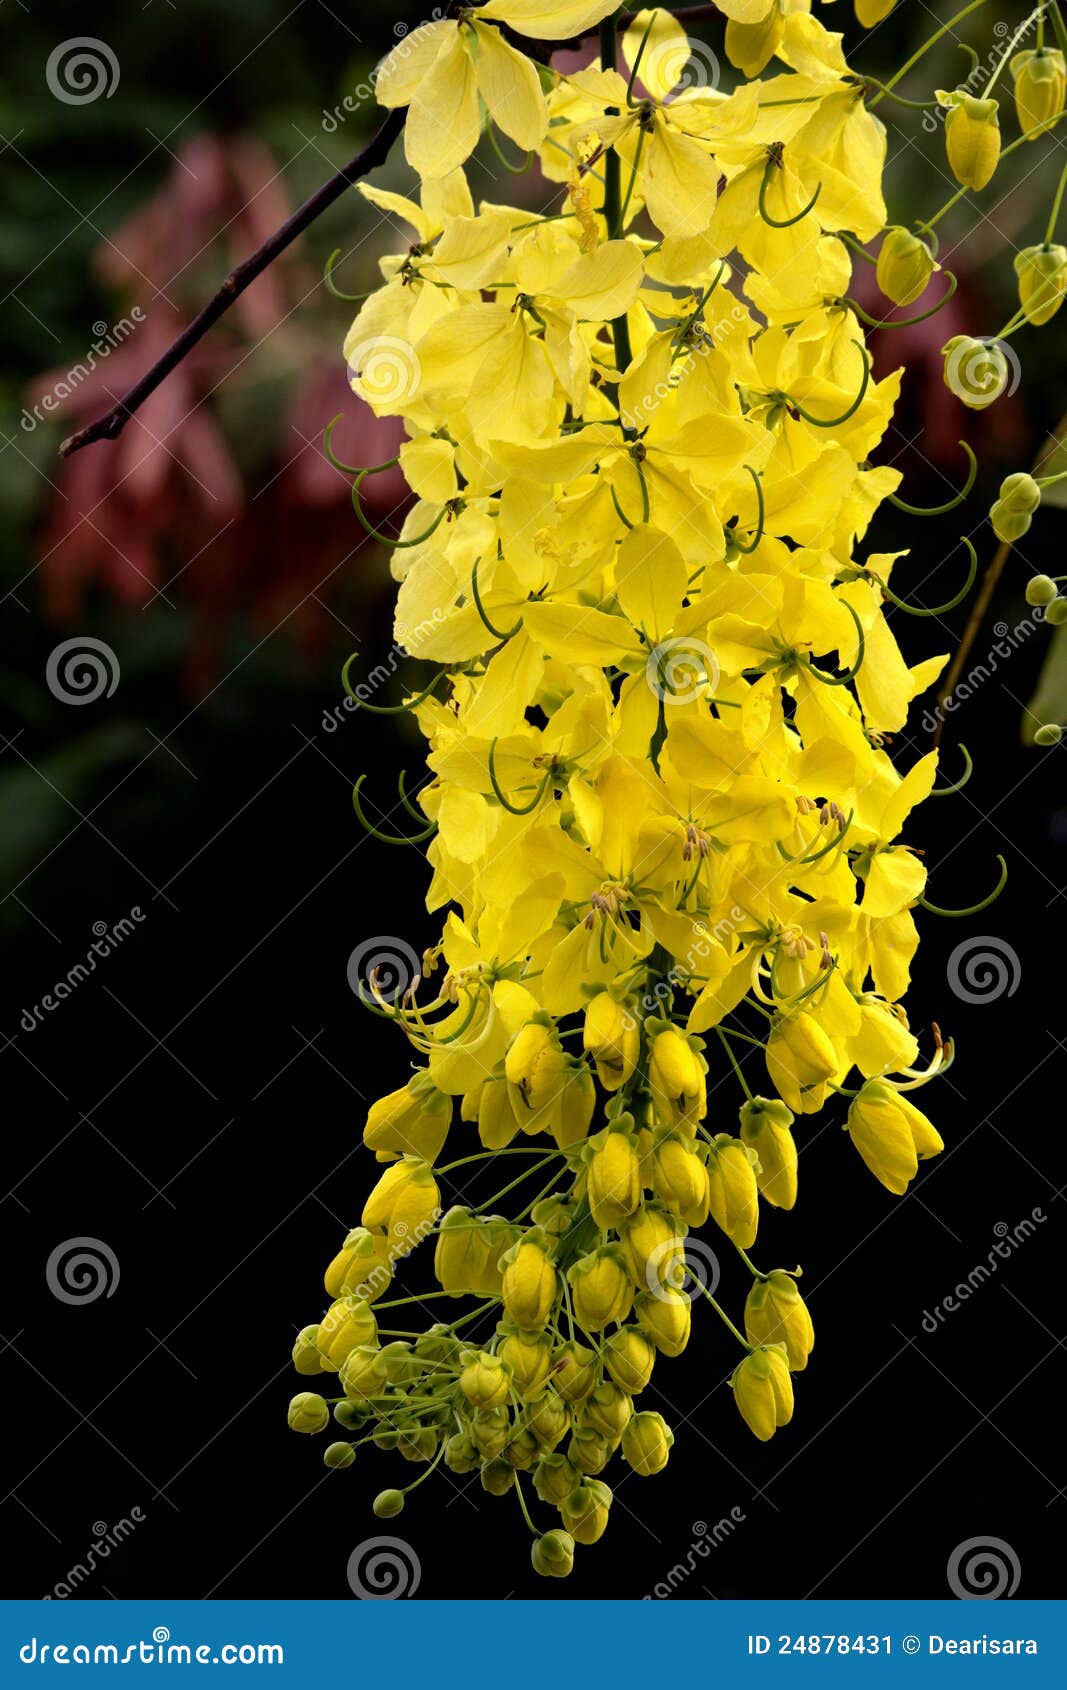 cassia fistula flower